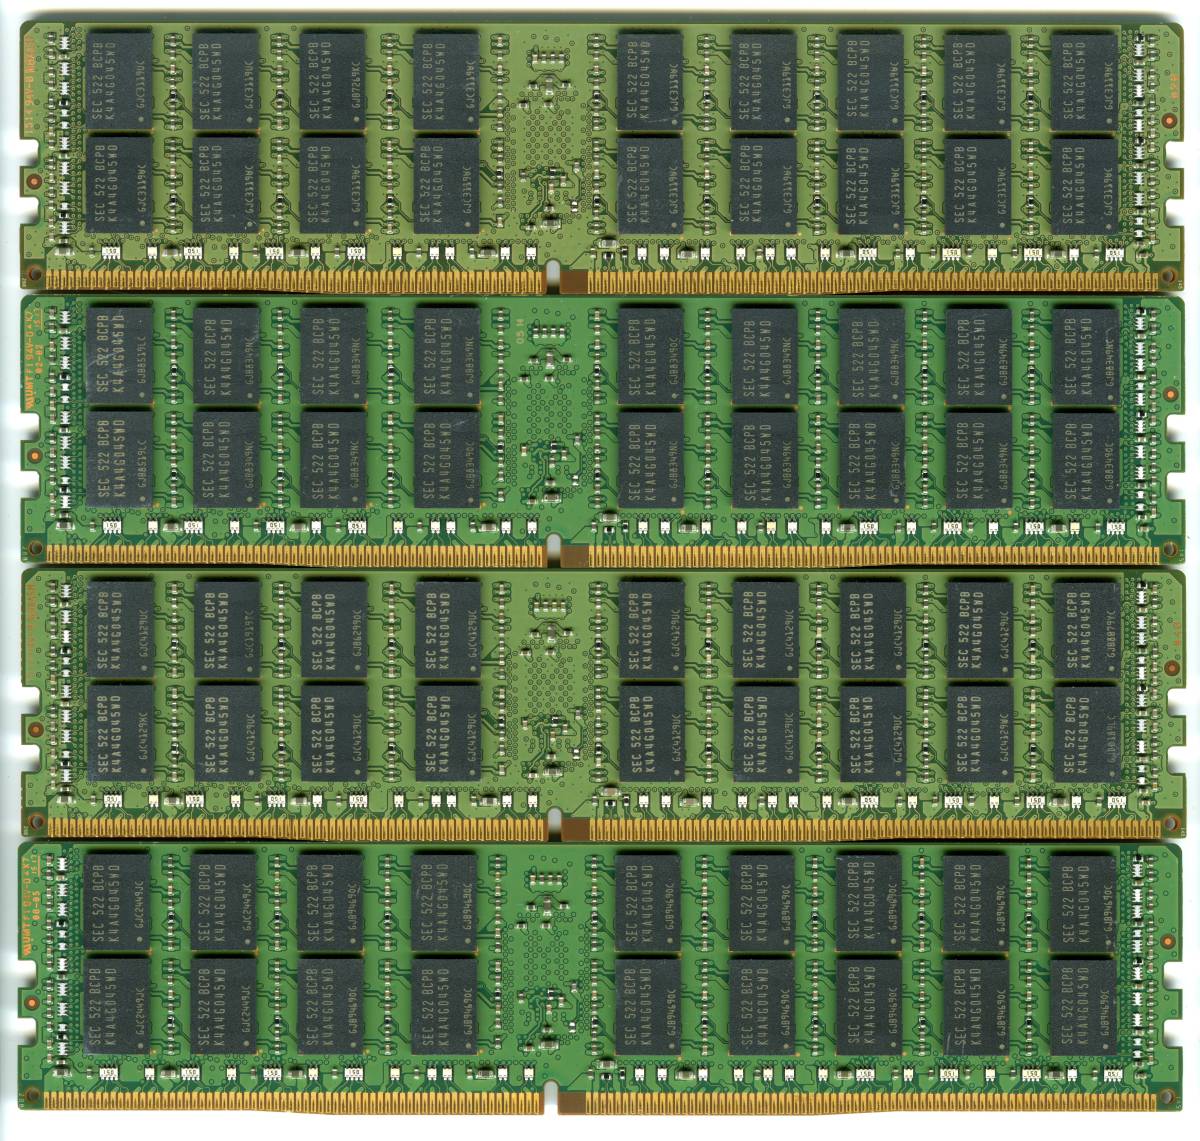 Samsung、DDR4-2133、ECC Registered、16GB×4枚セットで64GB、中古 reg